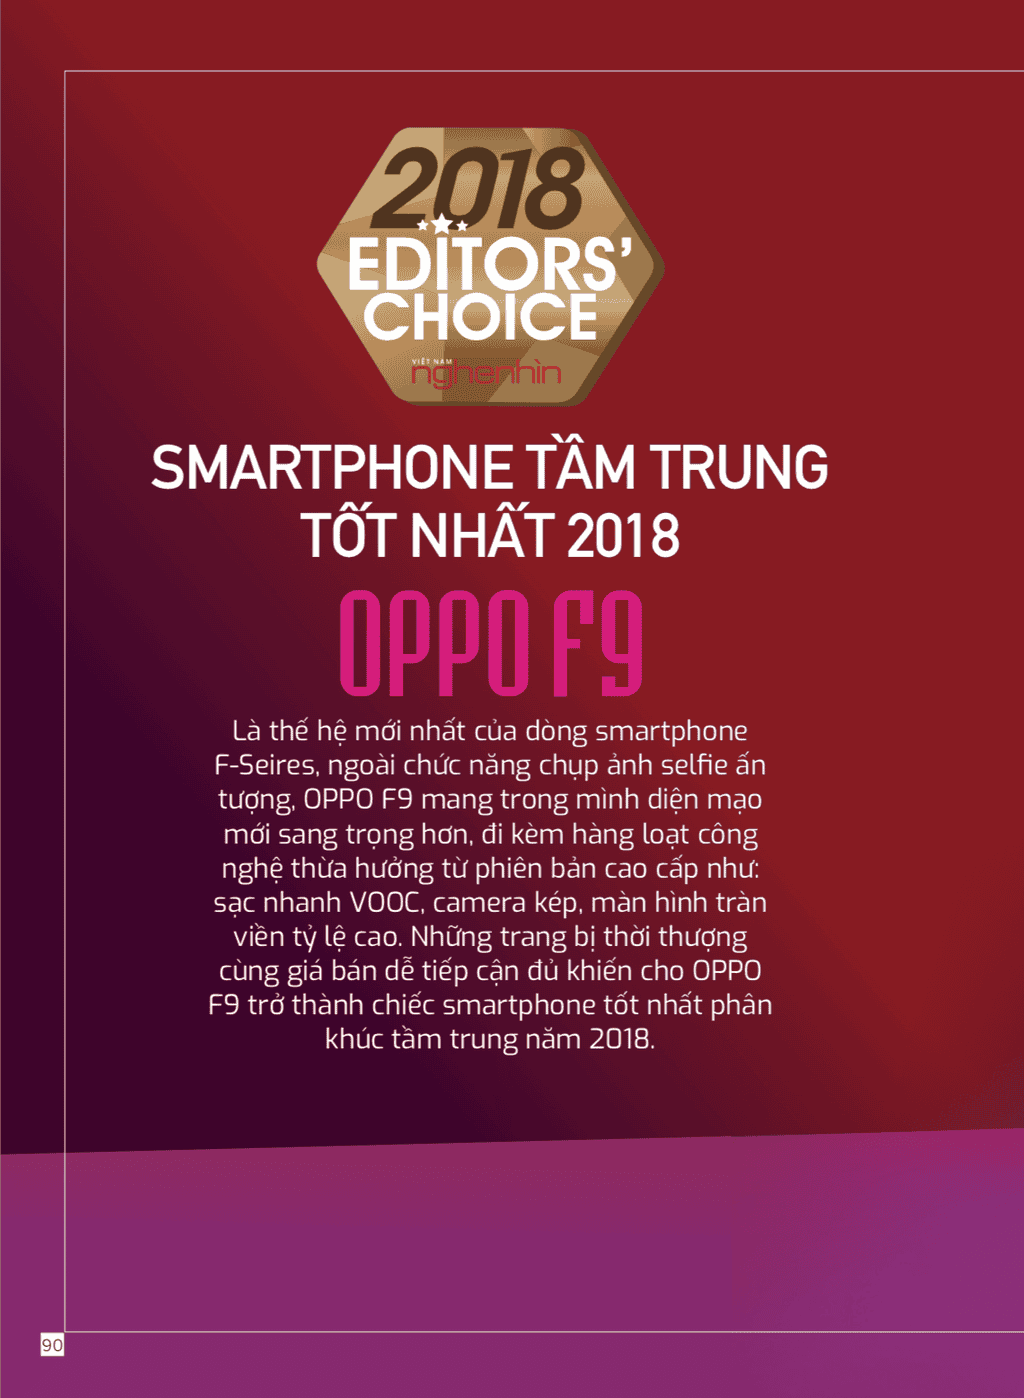 Editors' Choice 2018: Oppo F9 - Smartphone tầm trung tốt nhất 2018  ảnh 1